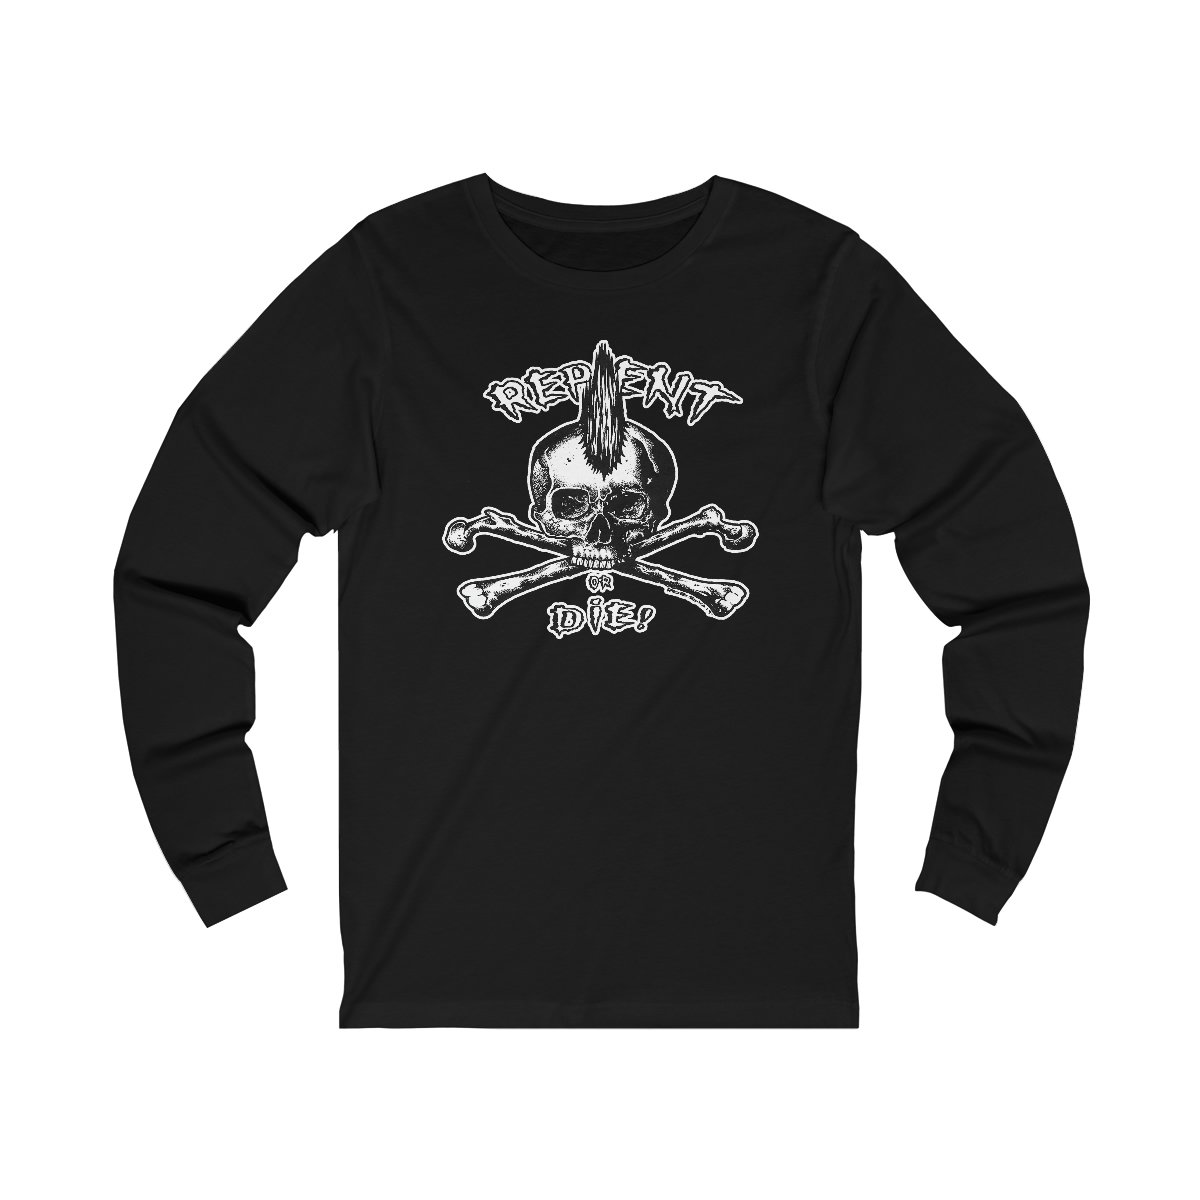 livetwice_punkart – Repent or Die Long Sleeve Tshirt 3501